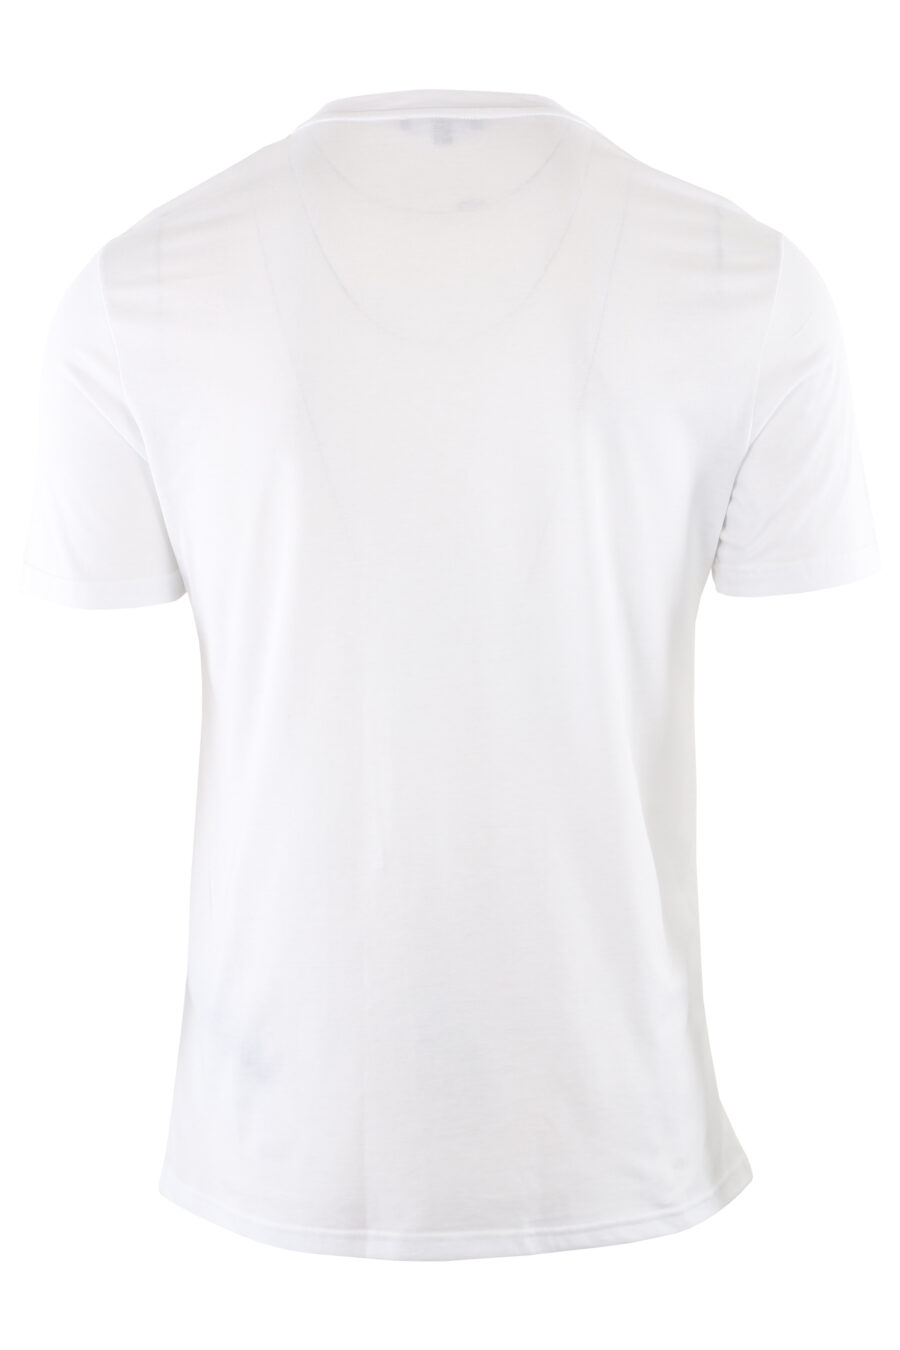 Camiseta blanca con logo negro bordado - IMG 7420